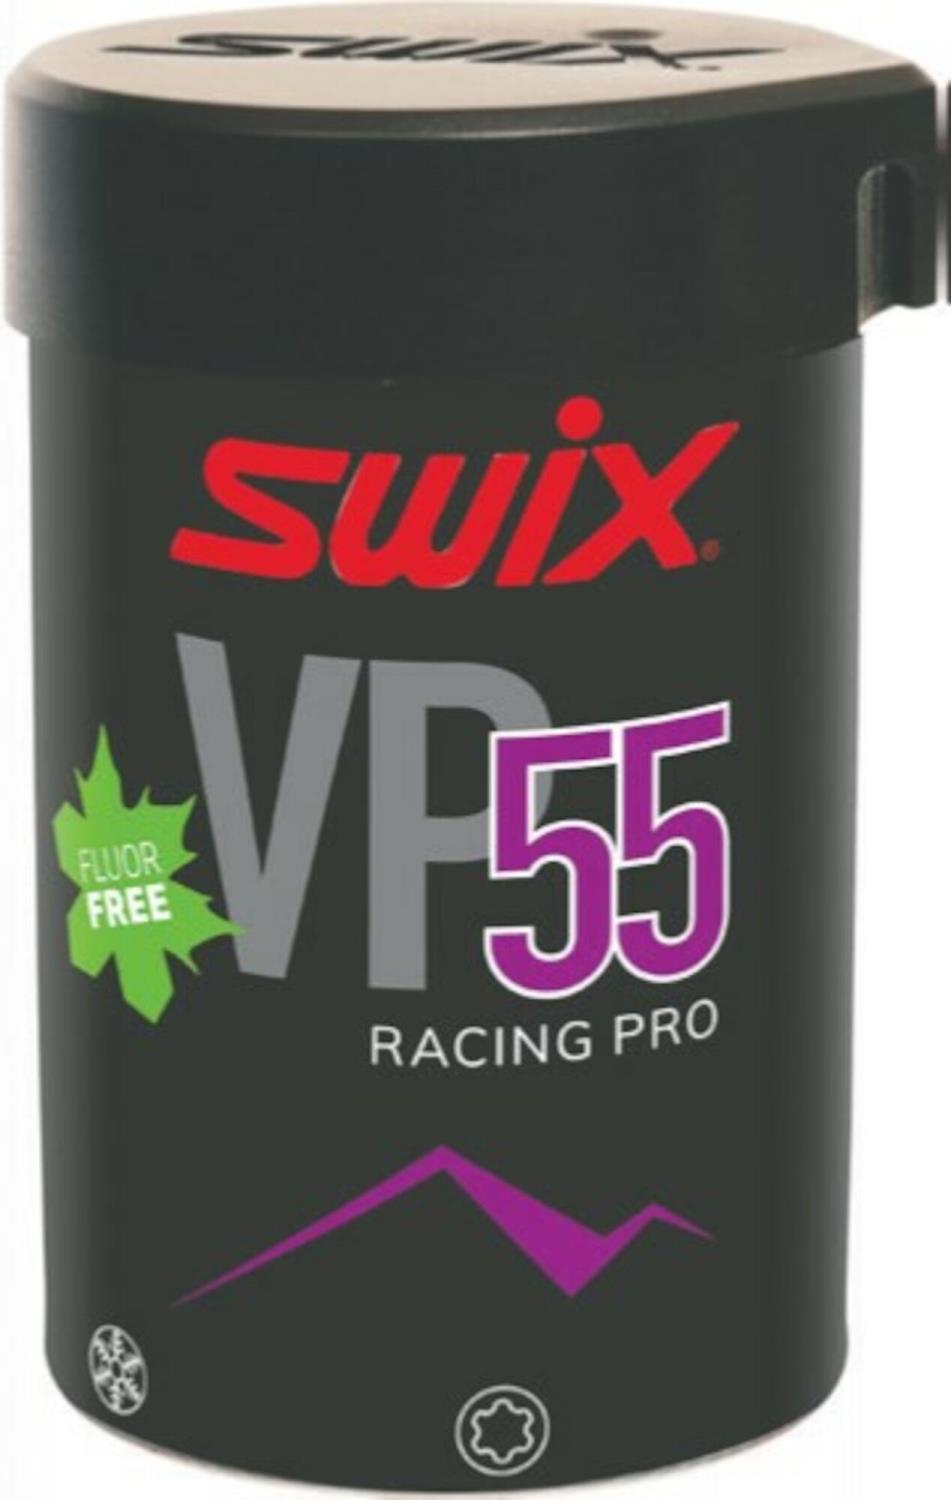 Swix  VP55 Pro, 45g